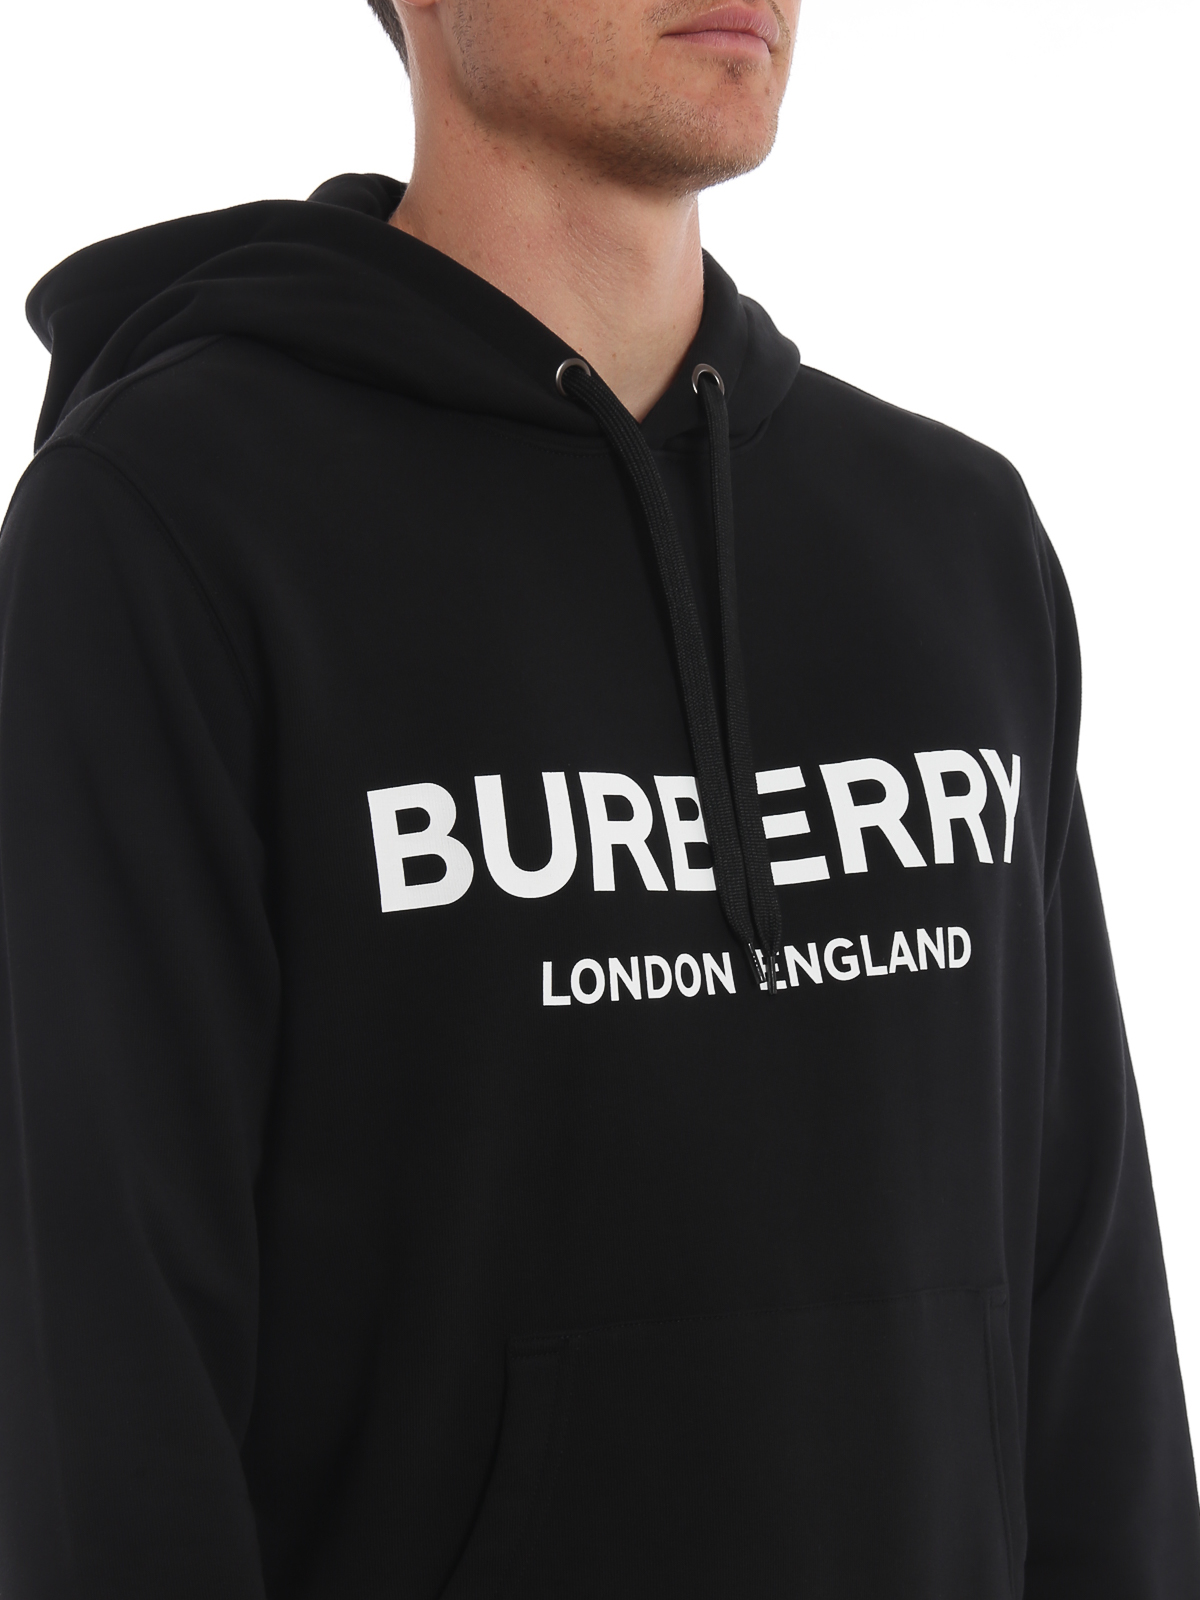 Aprender acerca 48+ imagen burberry hoodie london england - Viaterra.mx